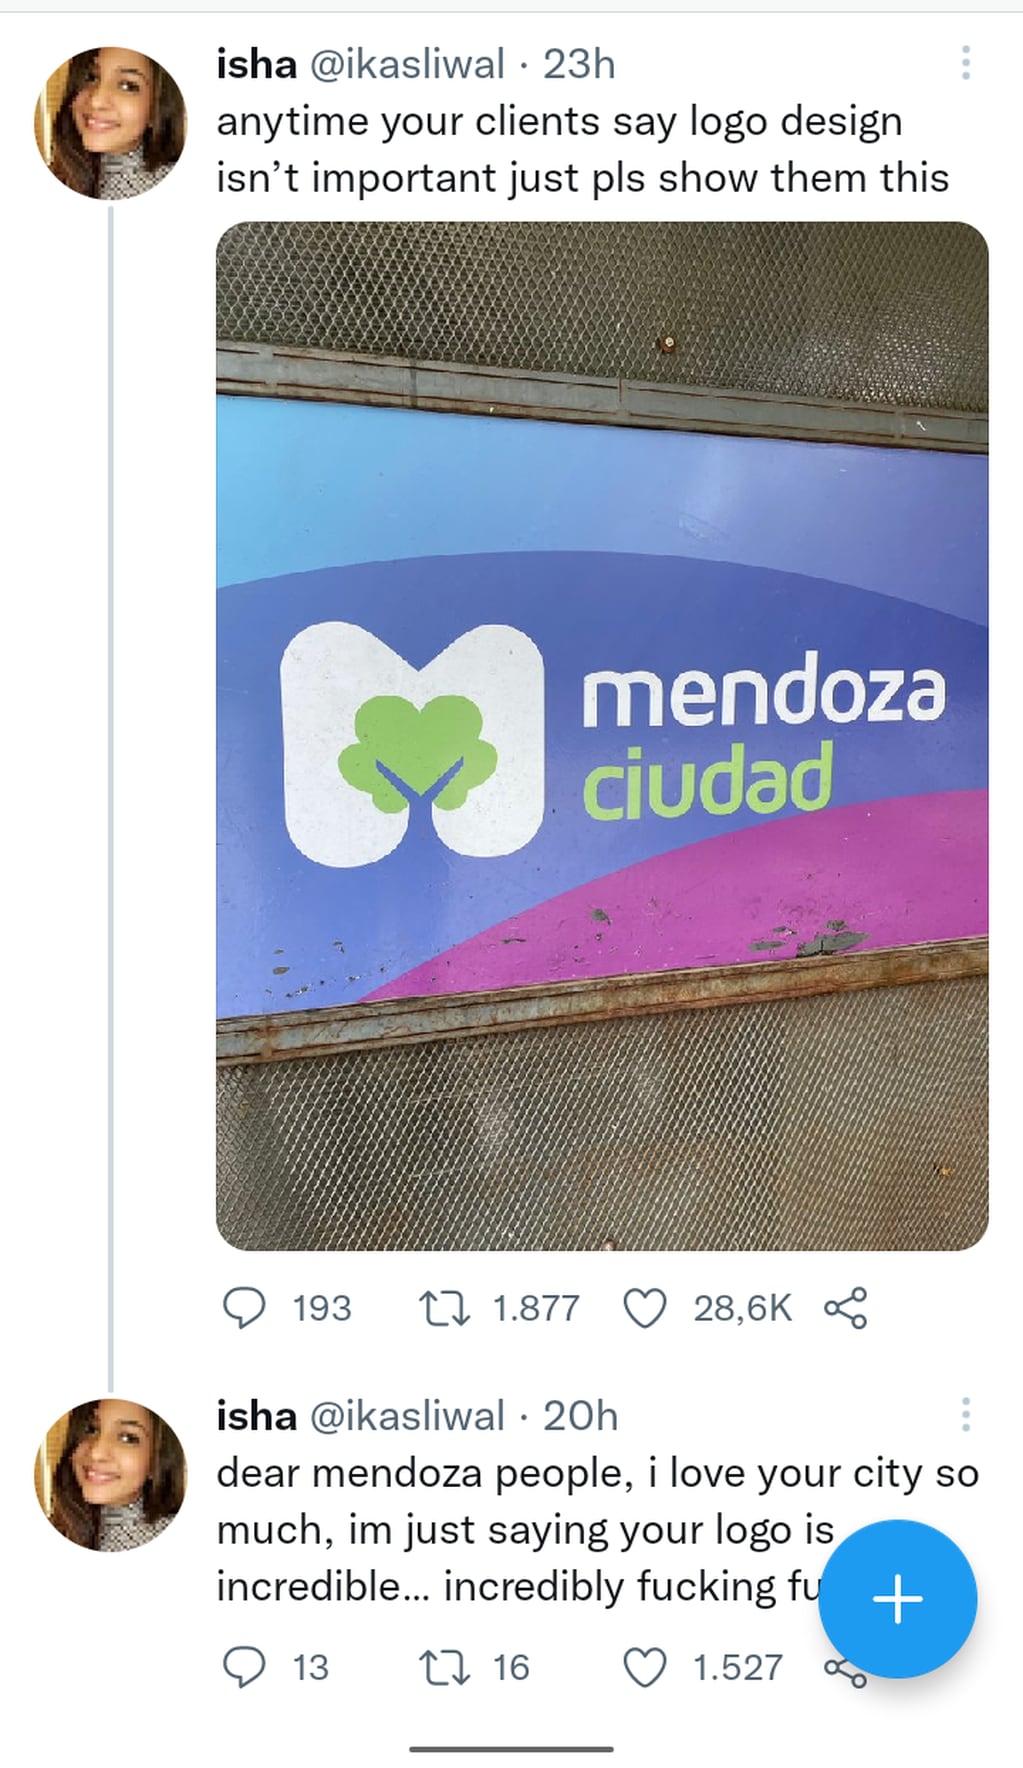 El logo de la Ciudad de Mendoza desató la polémica en Twitter